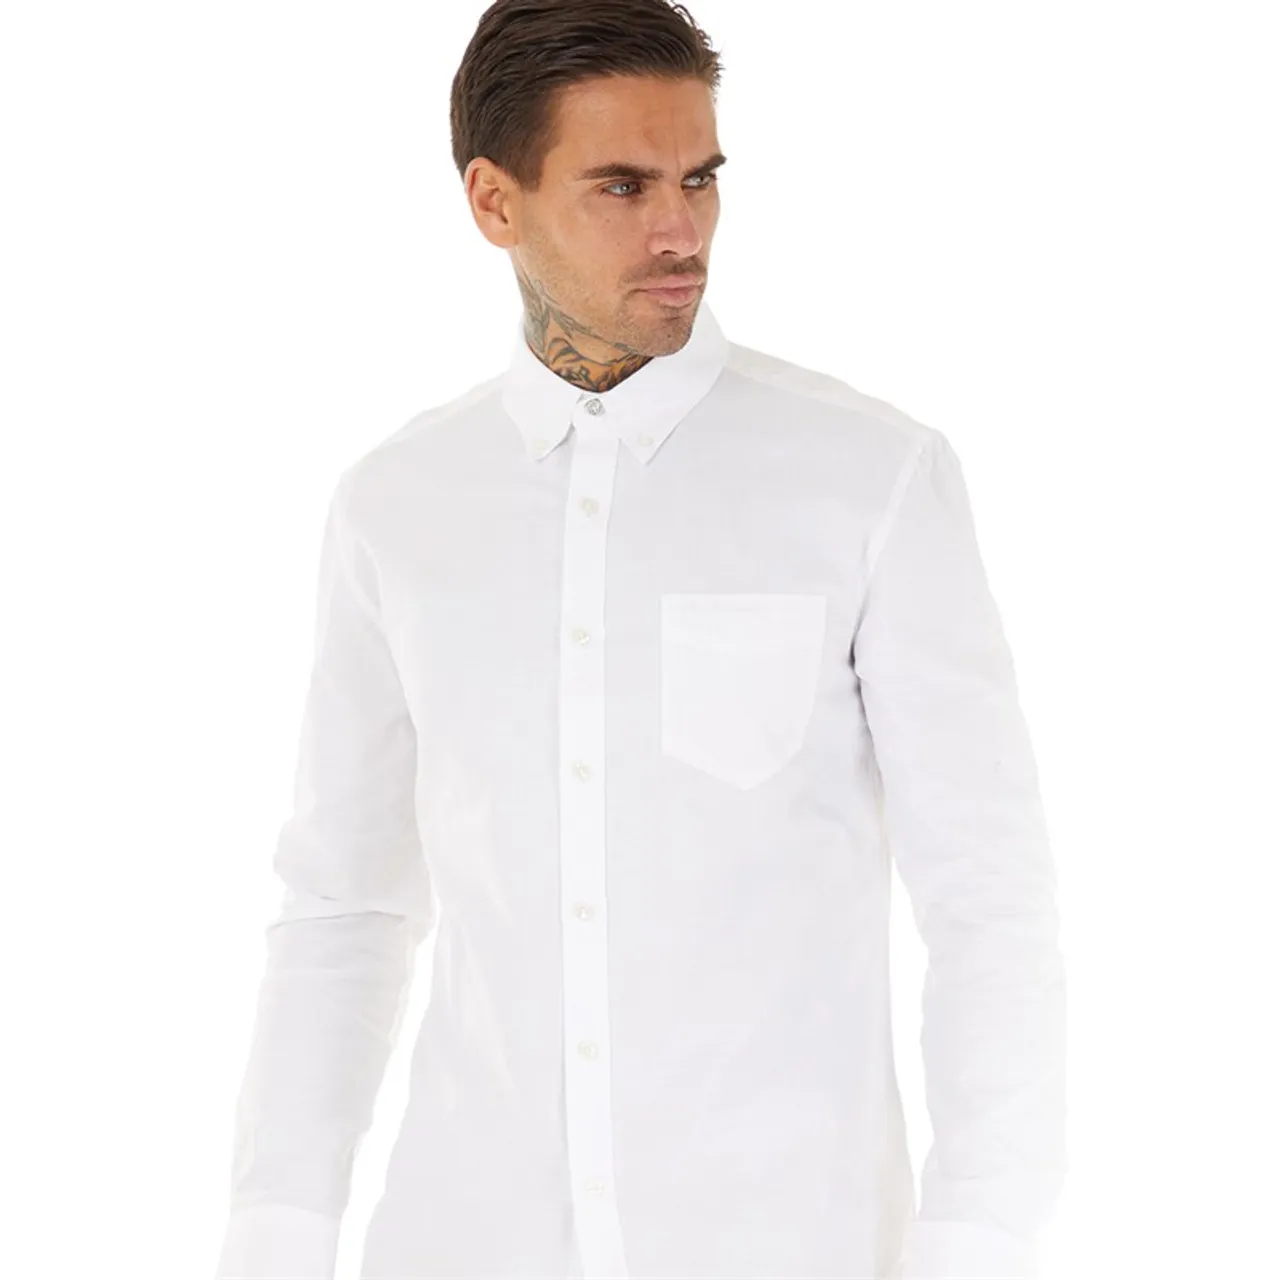 Ben Sherman Mens Long Sleeve Oxford Shirt White